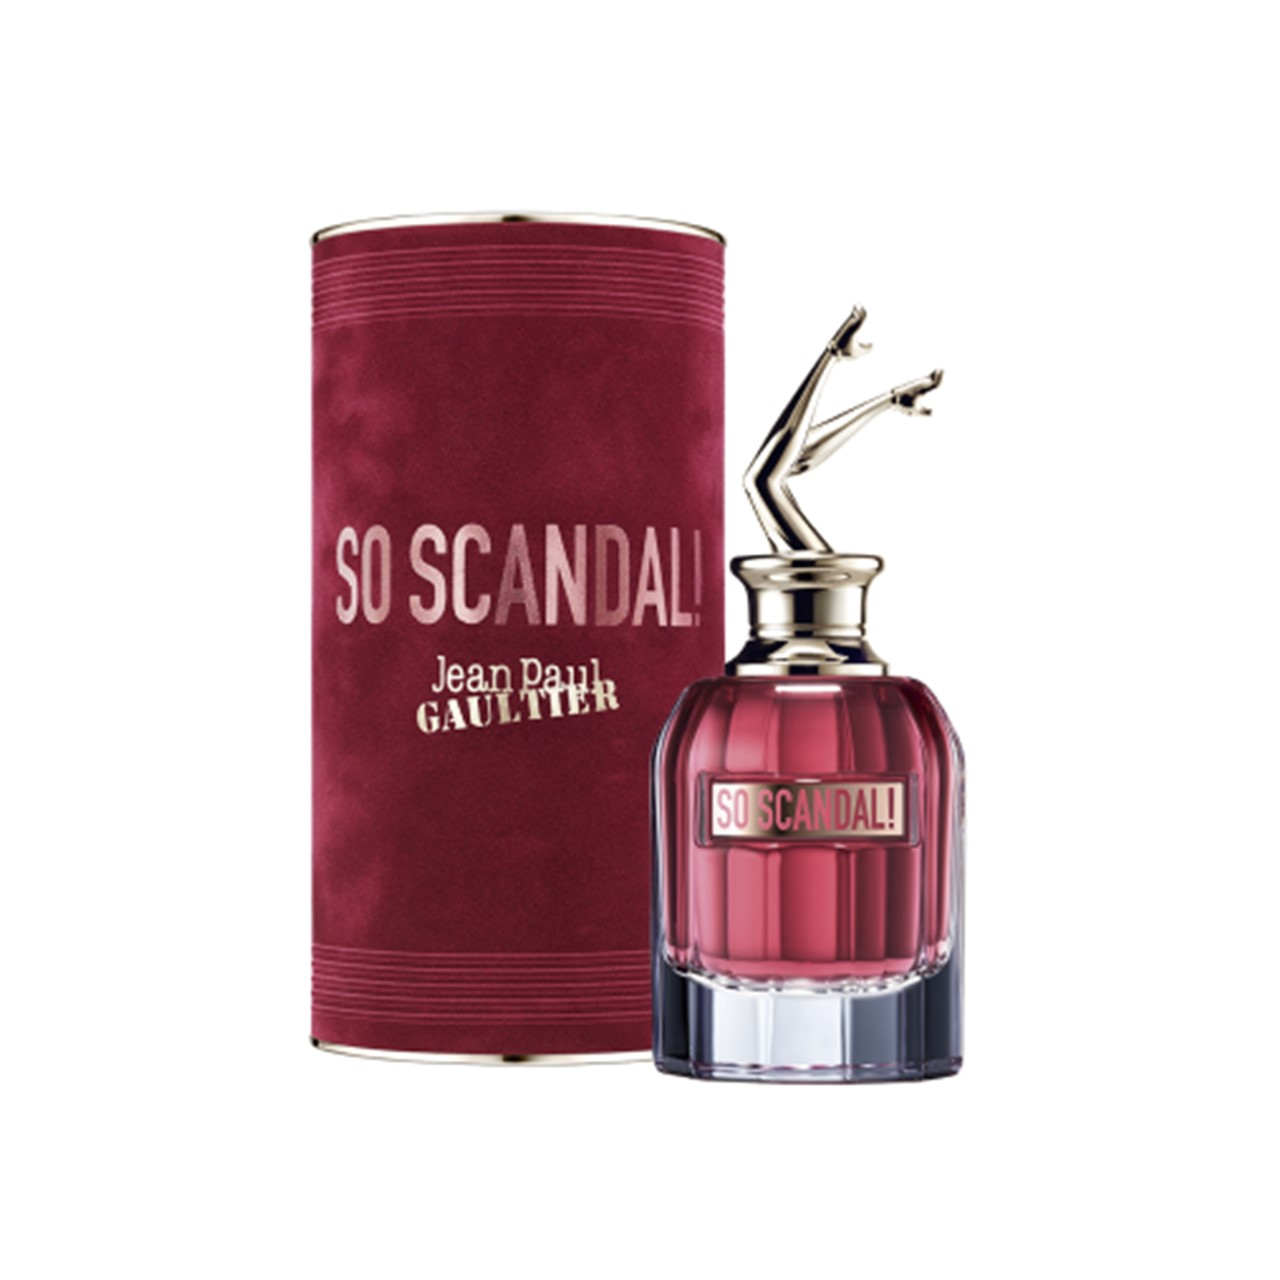 Scandal Le Parfum Jean Paul Gaultier Perfume A New Fragrance For Women ...